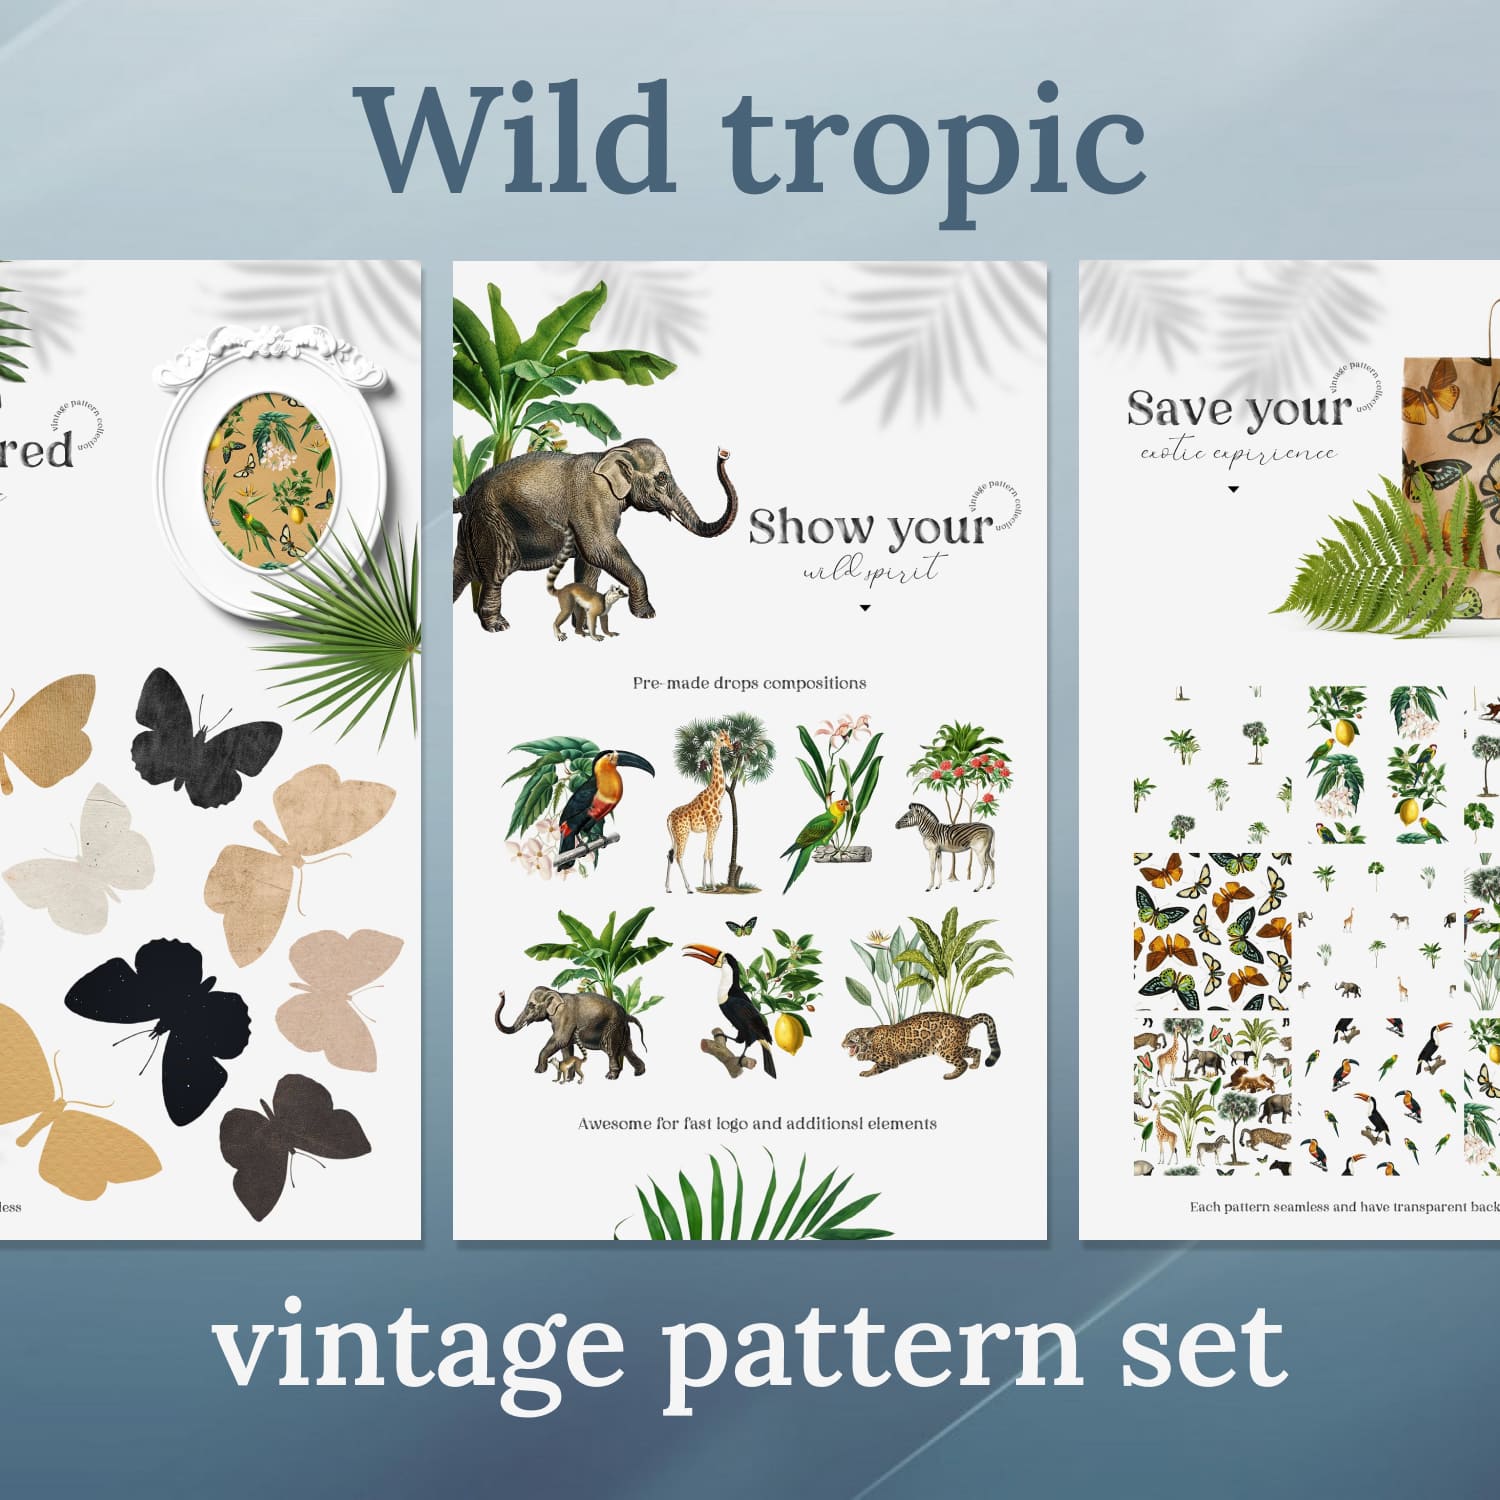 Wild tropic vintage pattern set.